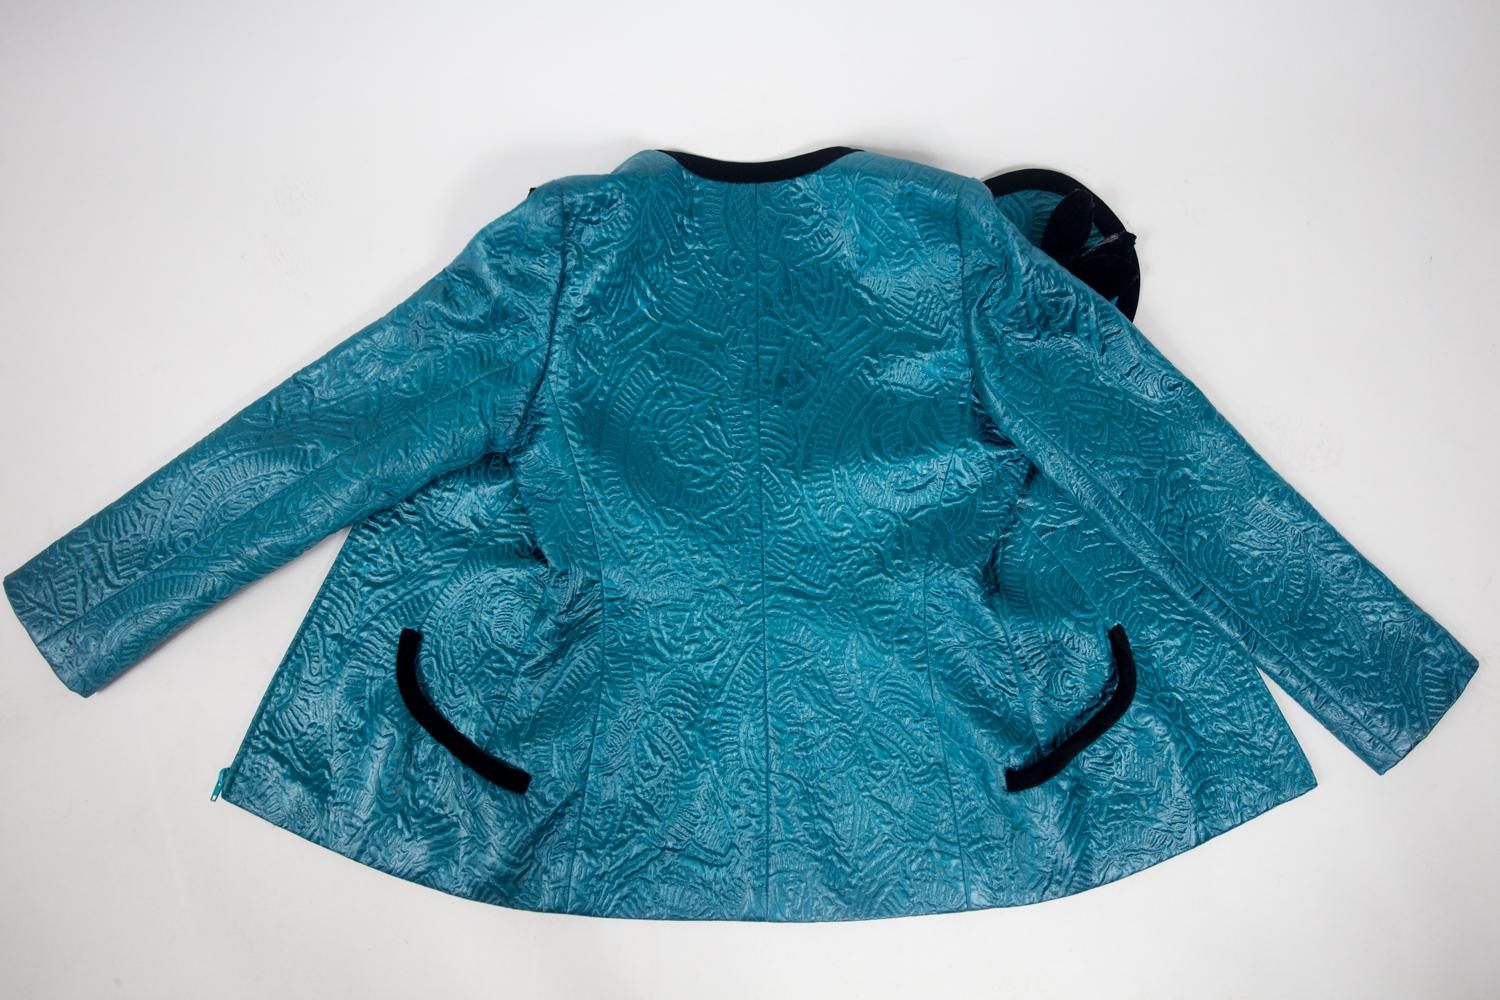 Blue A Pierre Cardin Silk Jacket From Jacqueline de Ribes Wardrobe Circa 1985 For Sale